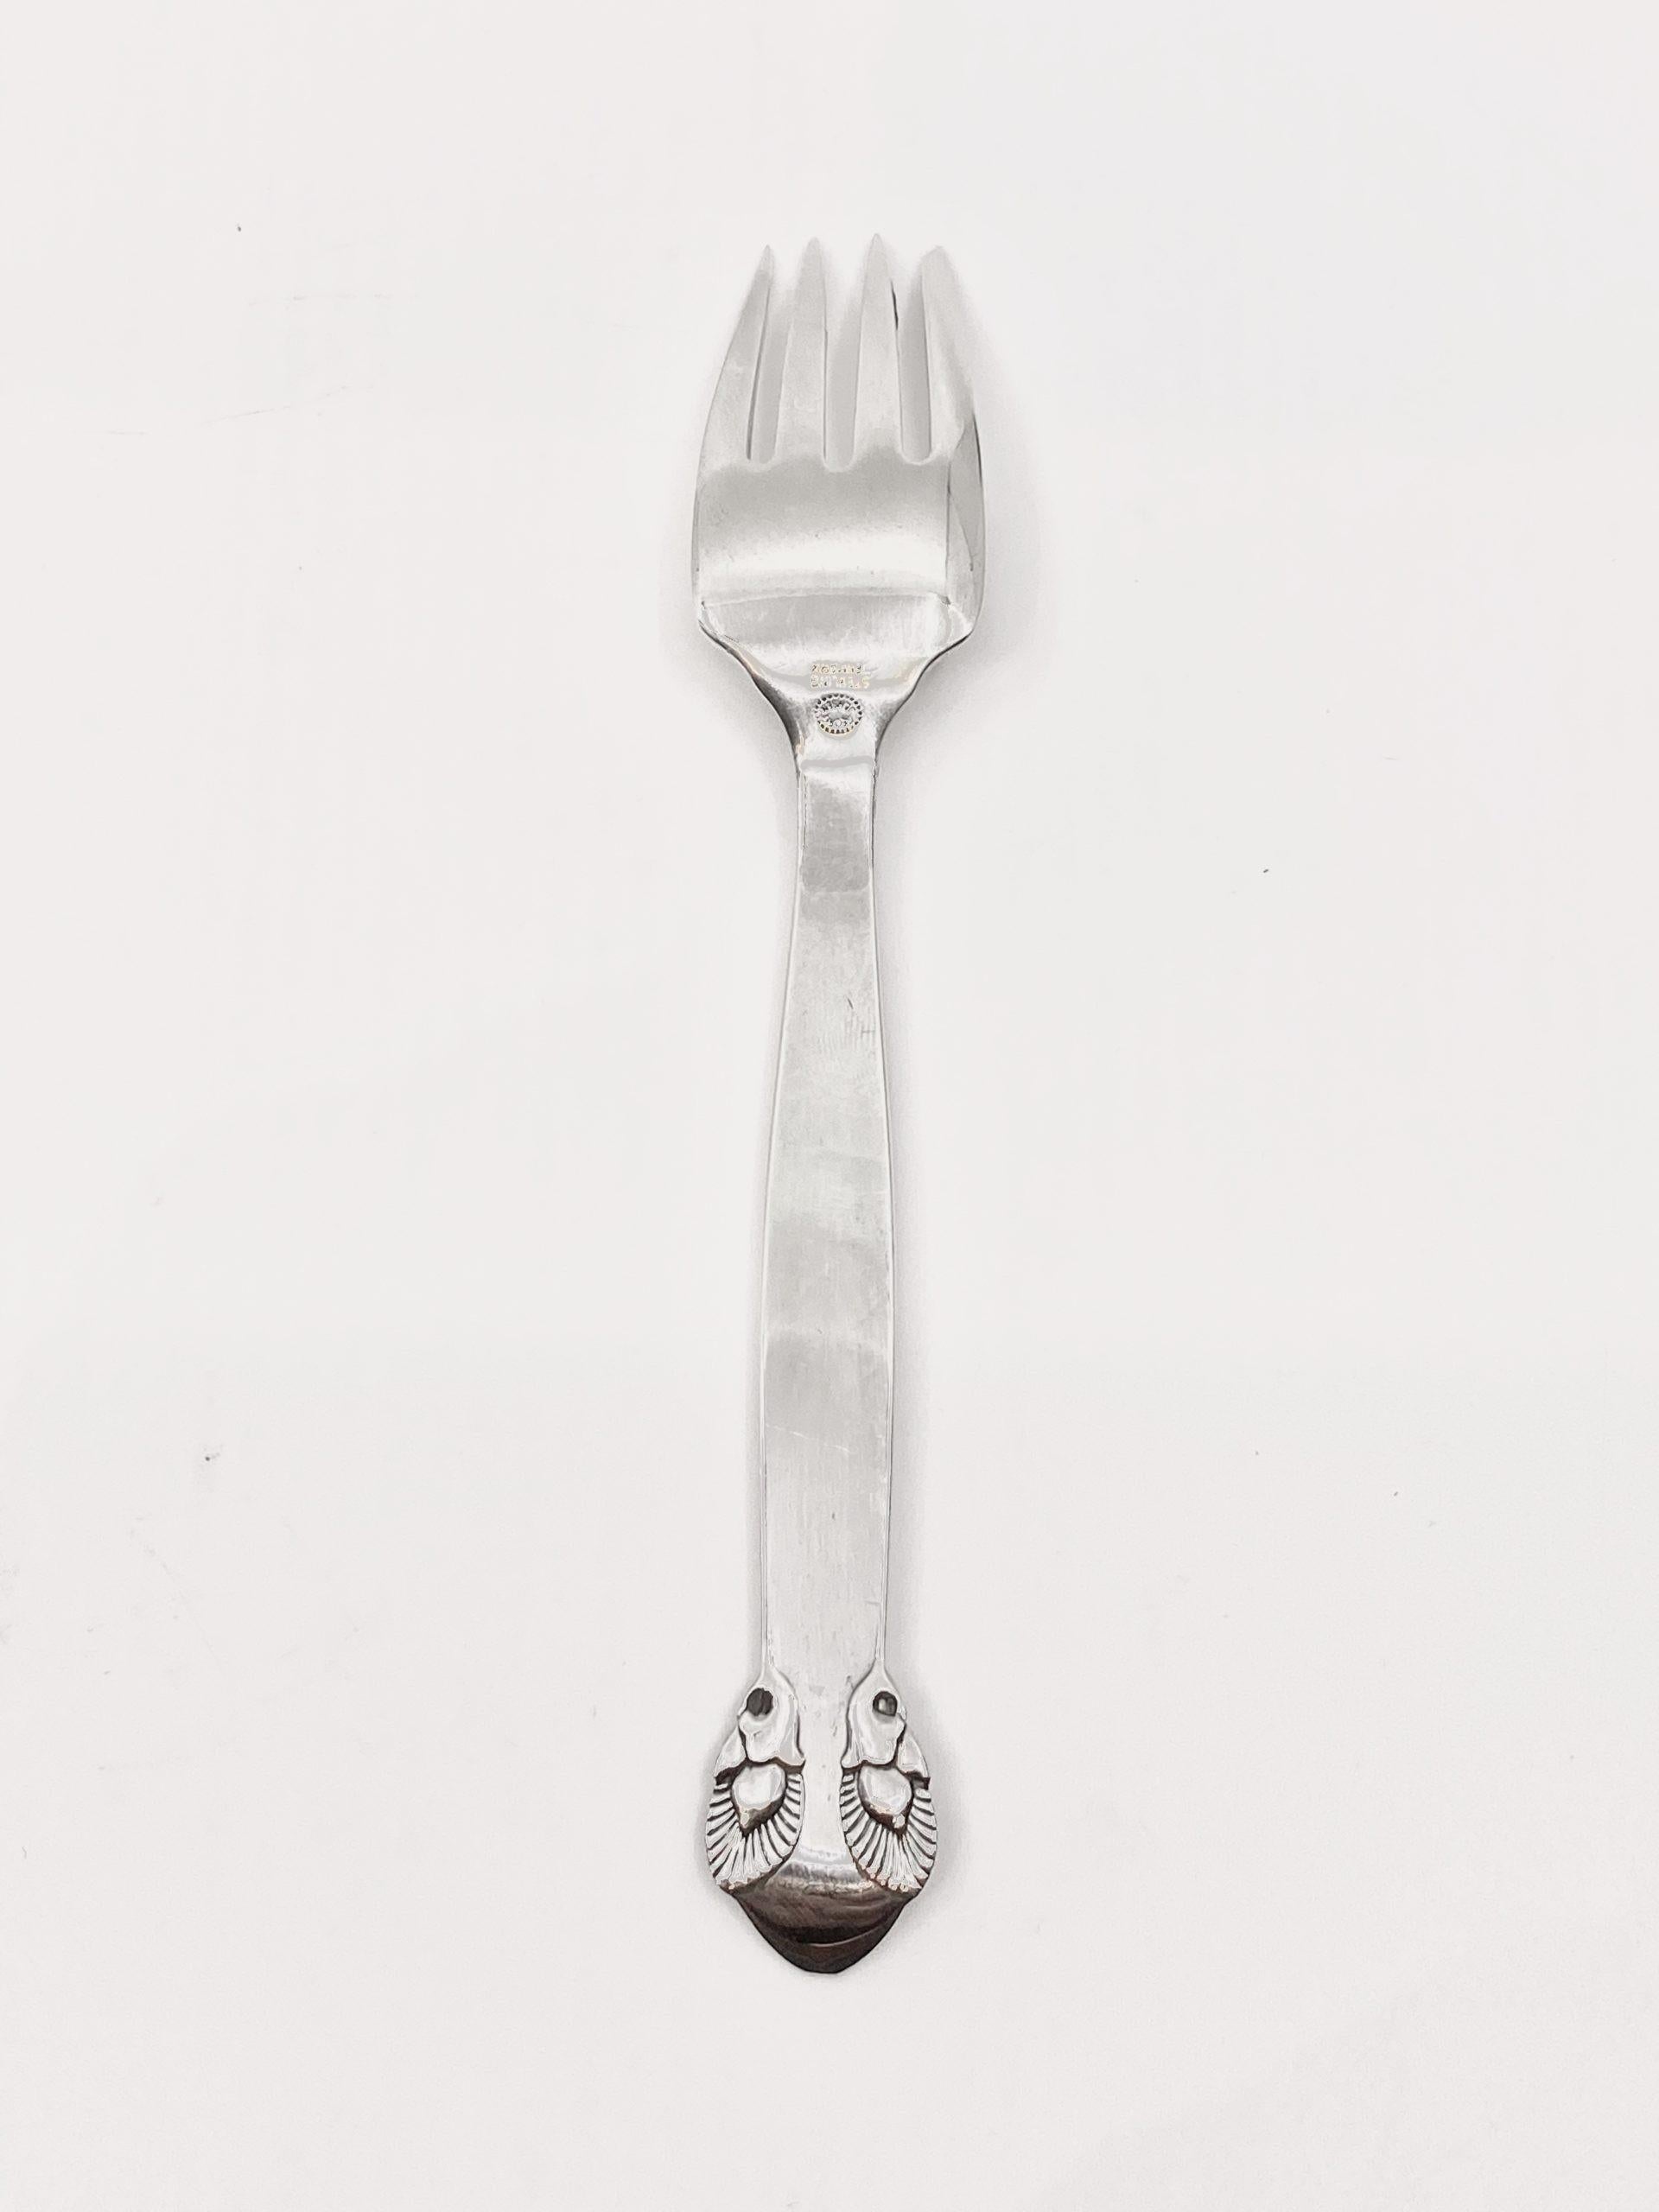 Art Deco Georg Jensen Bittersweet Sterling Silver Salad Fork 041 For Sale